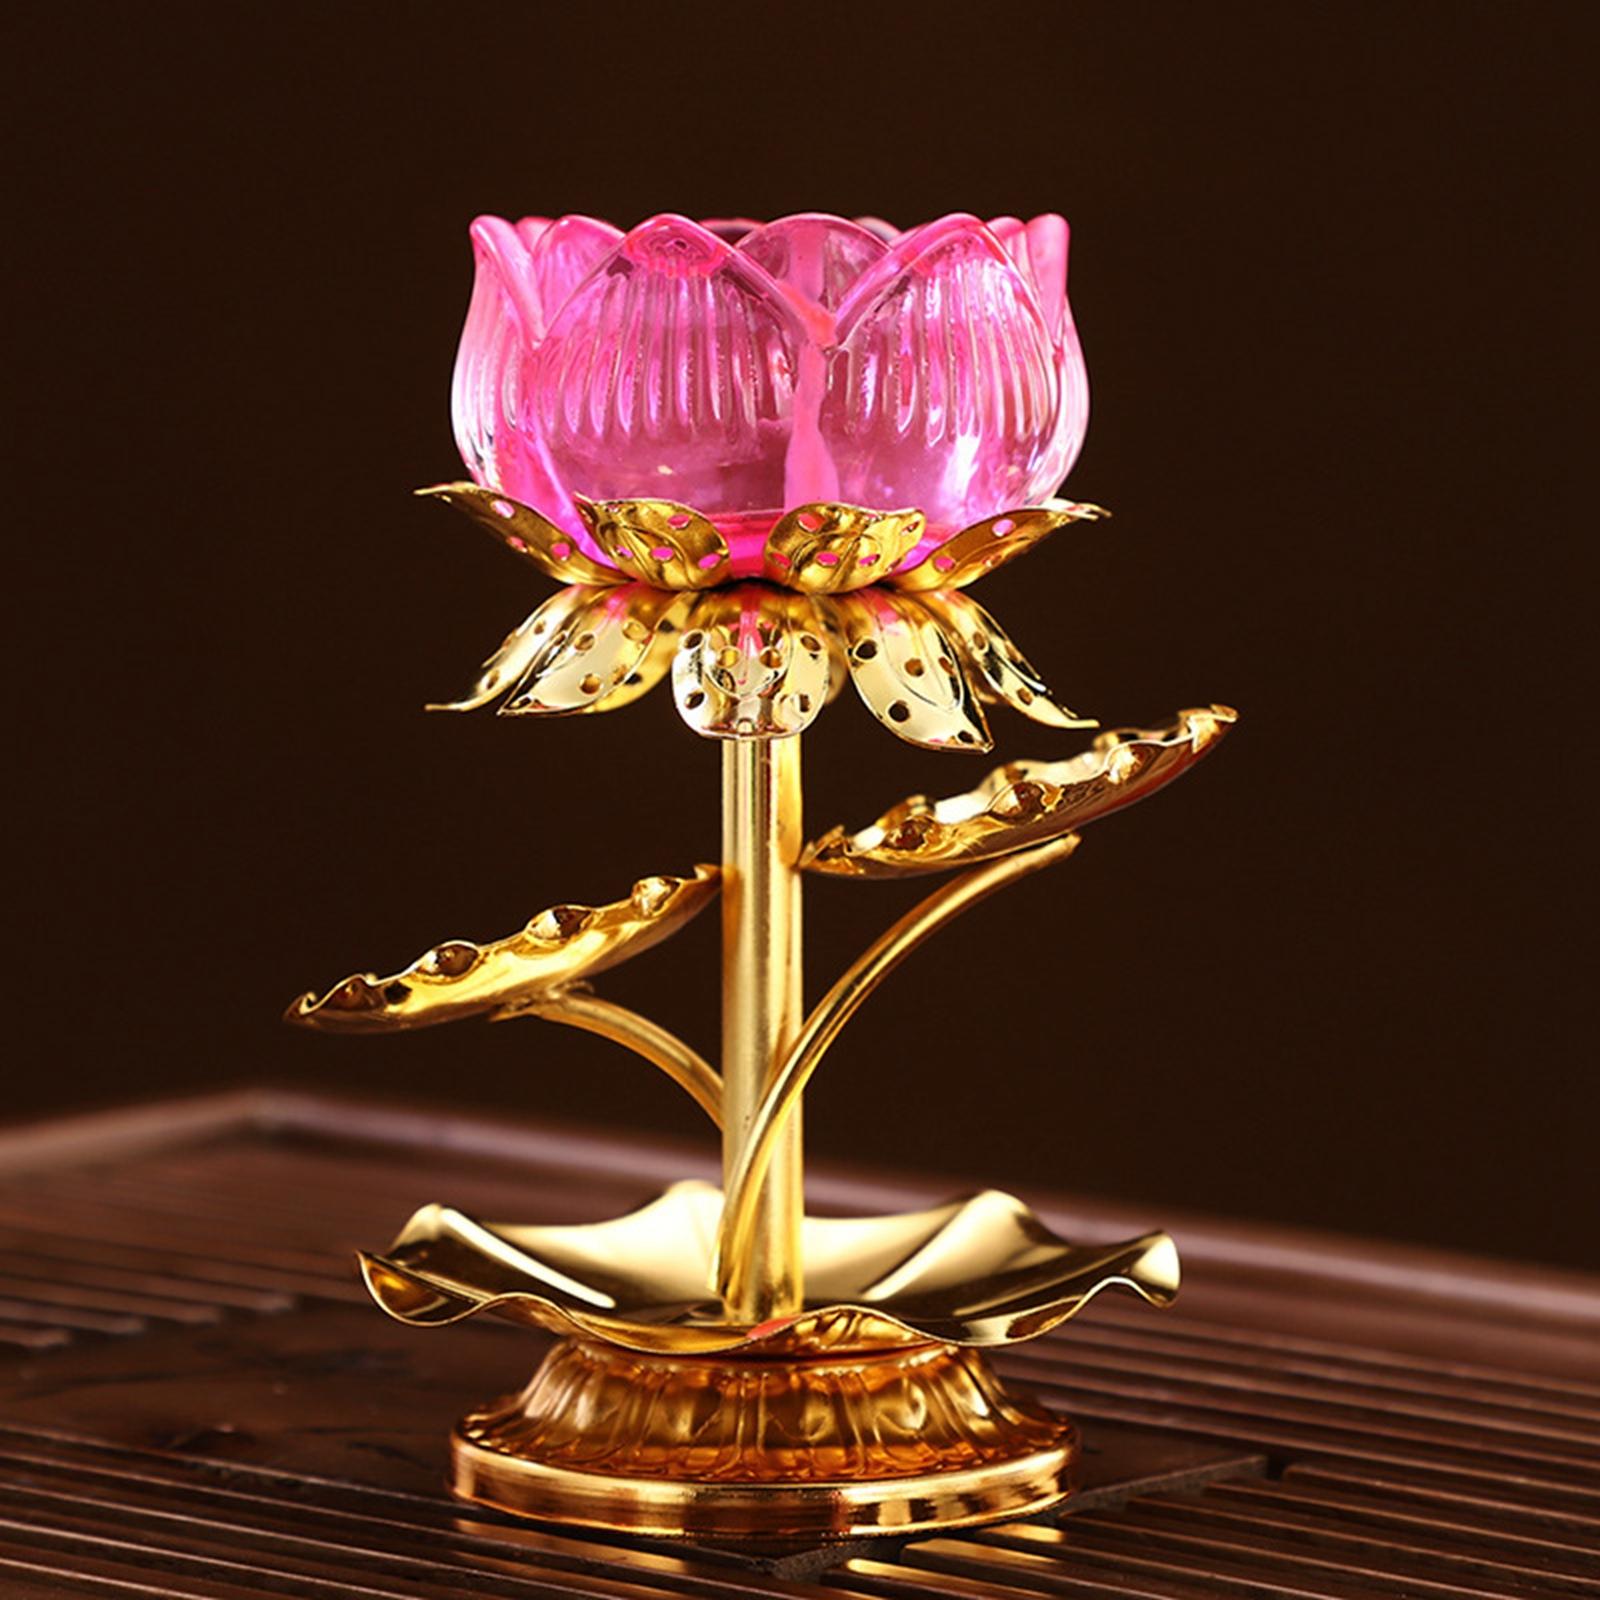 Butter Lamp Holder Meditation Metal Tea Light Candle Holders Altar Supplies Pink